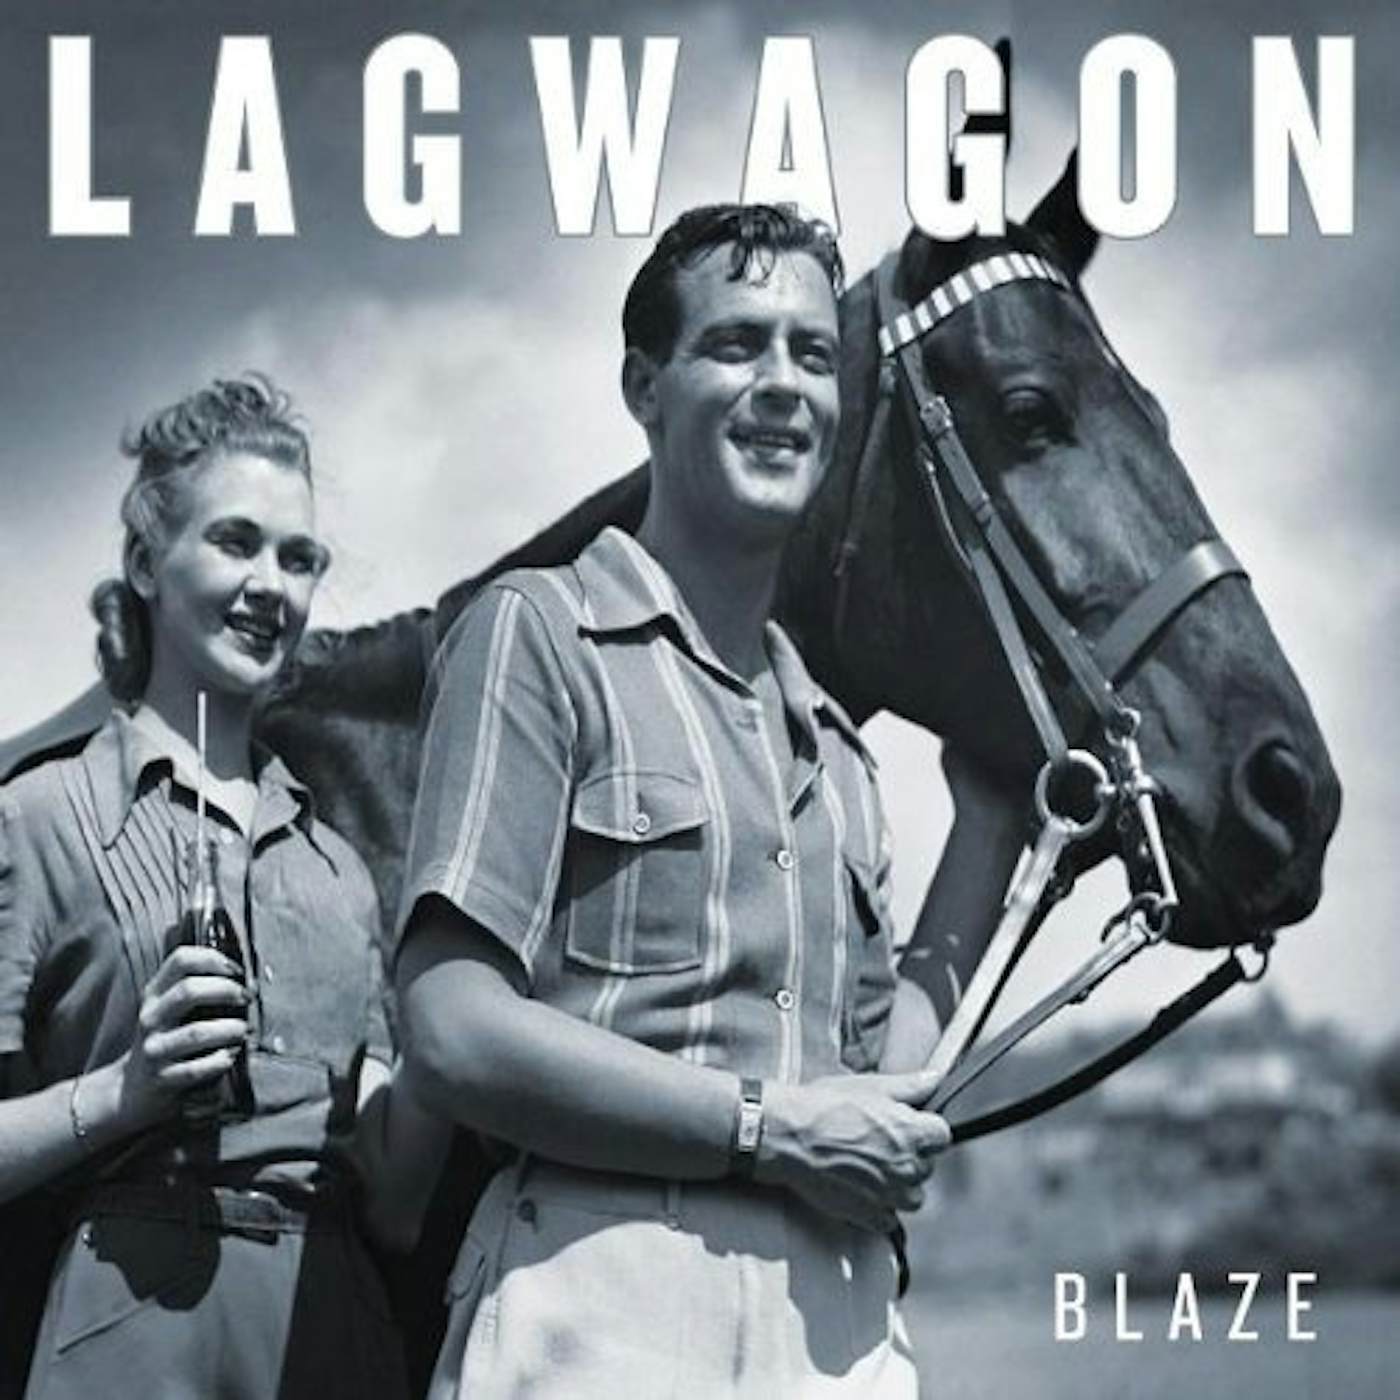 Lagwagon BLAZE CD